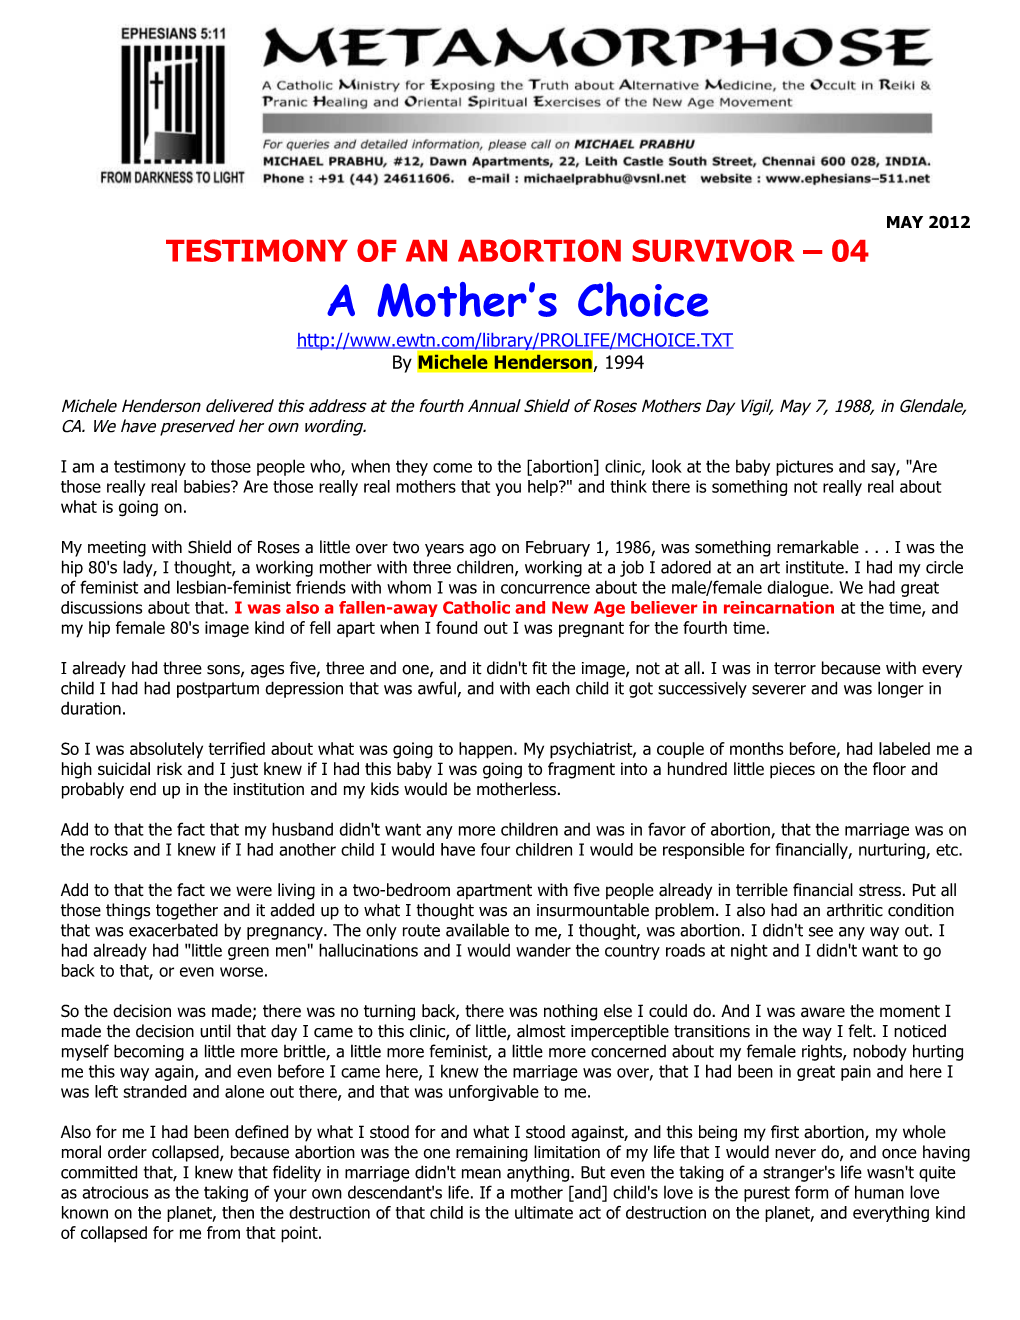 Testimony of an Abortion Survivor 04